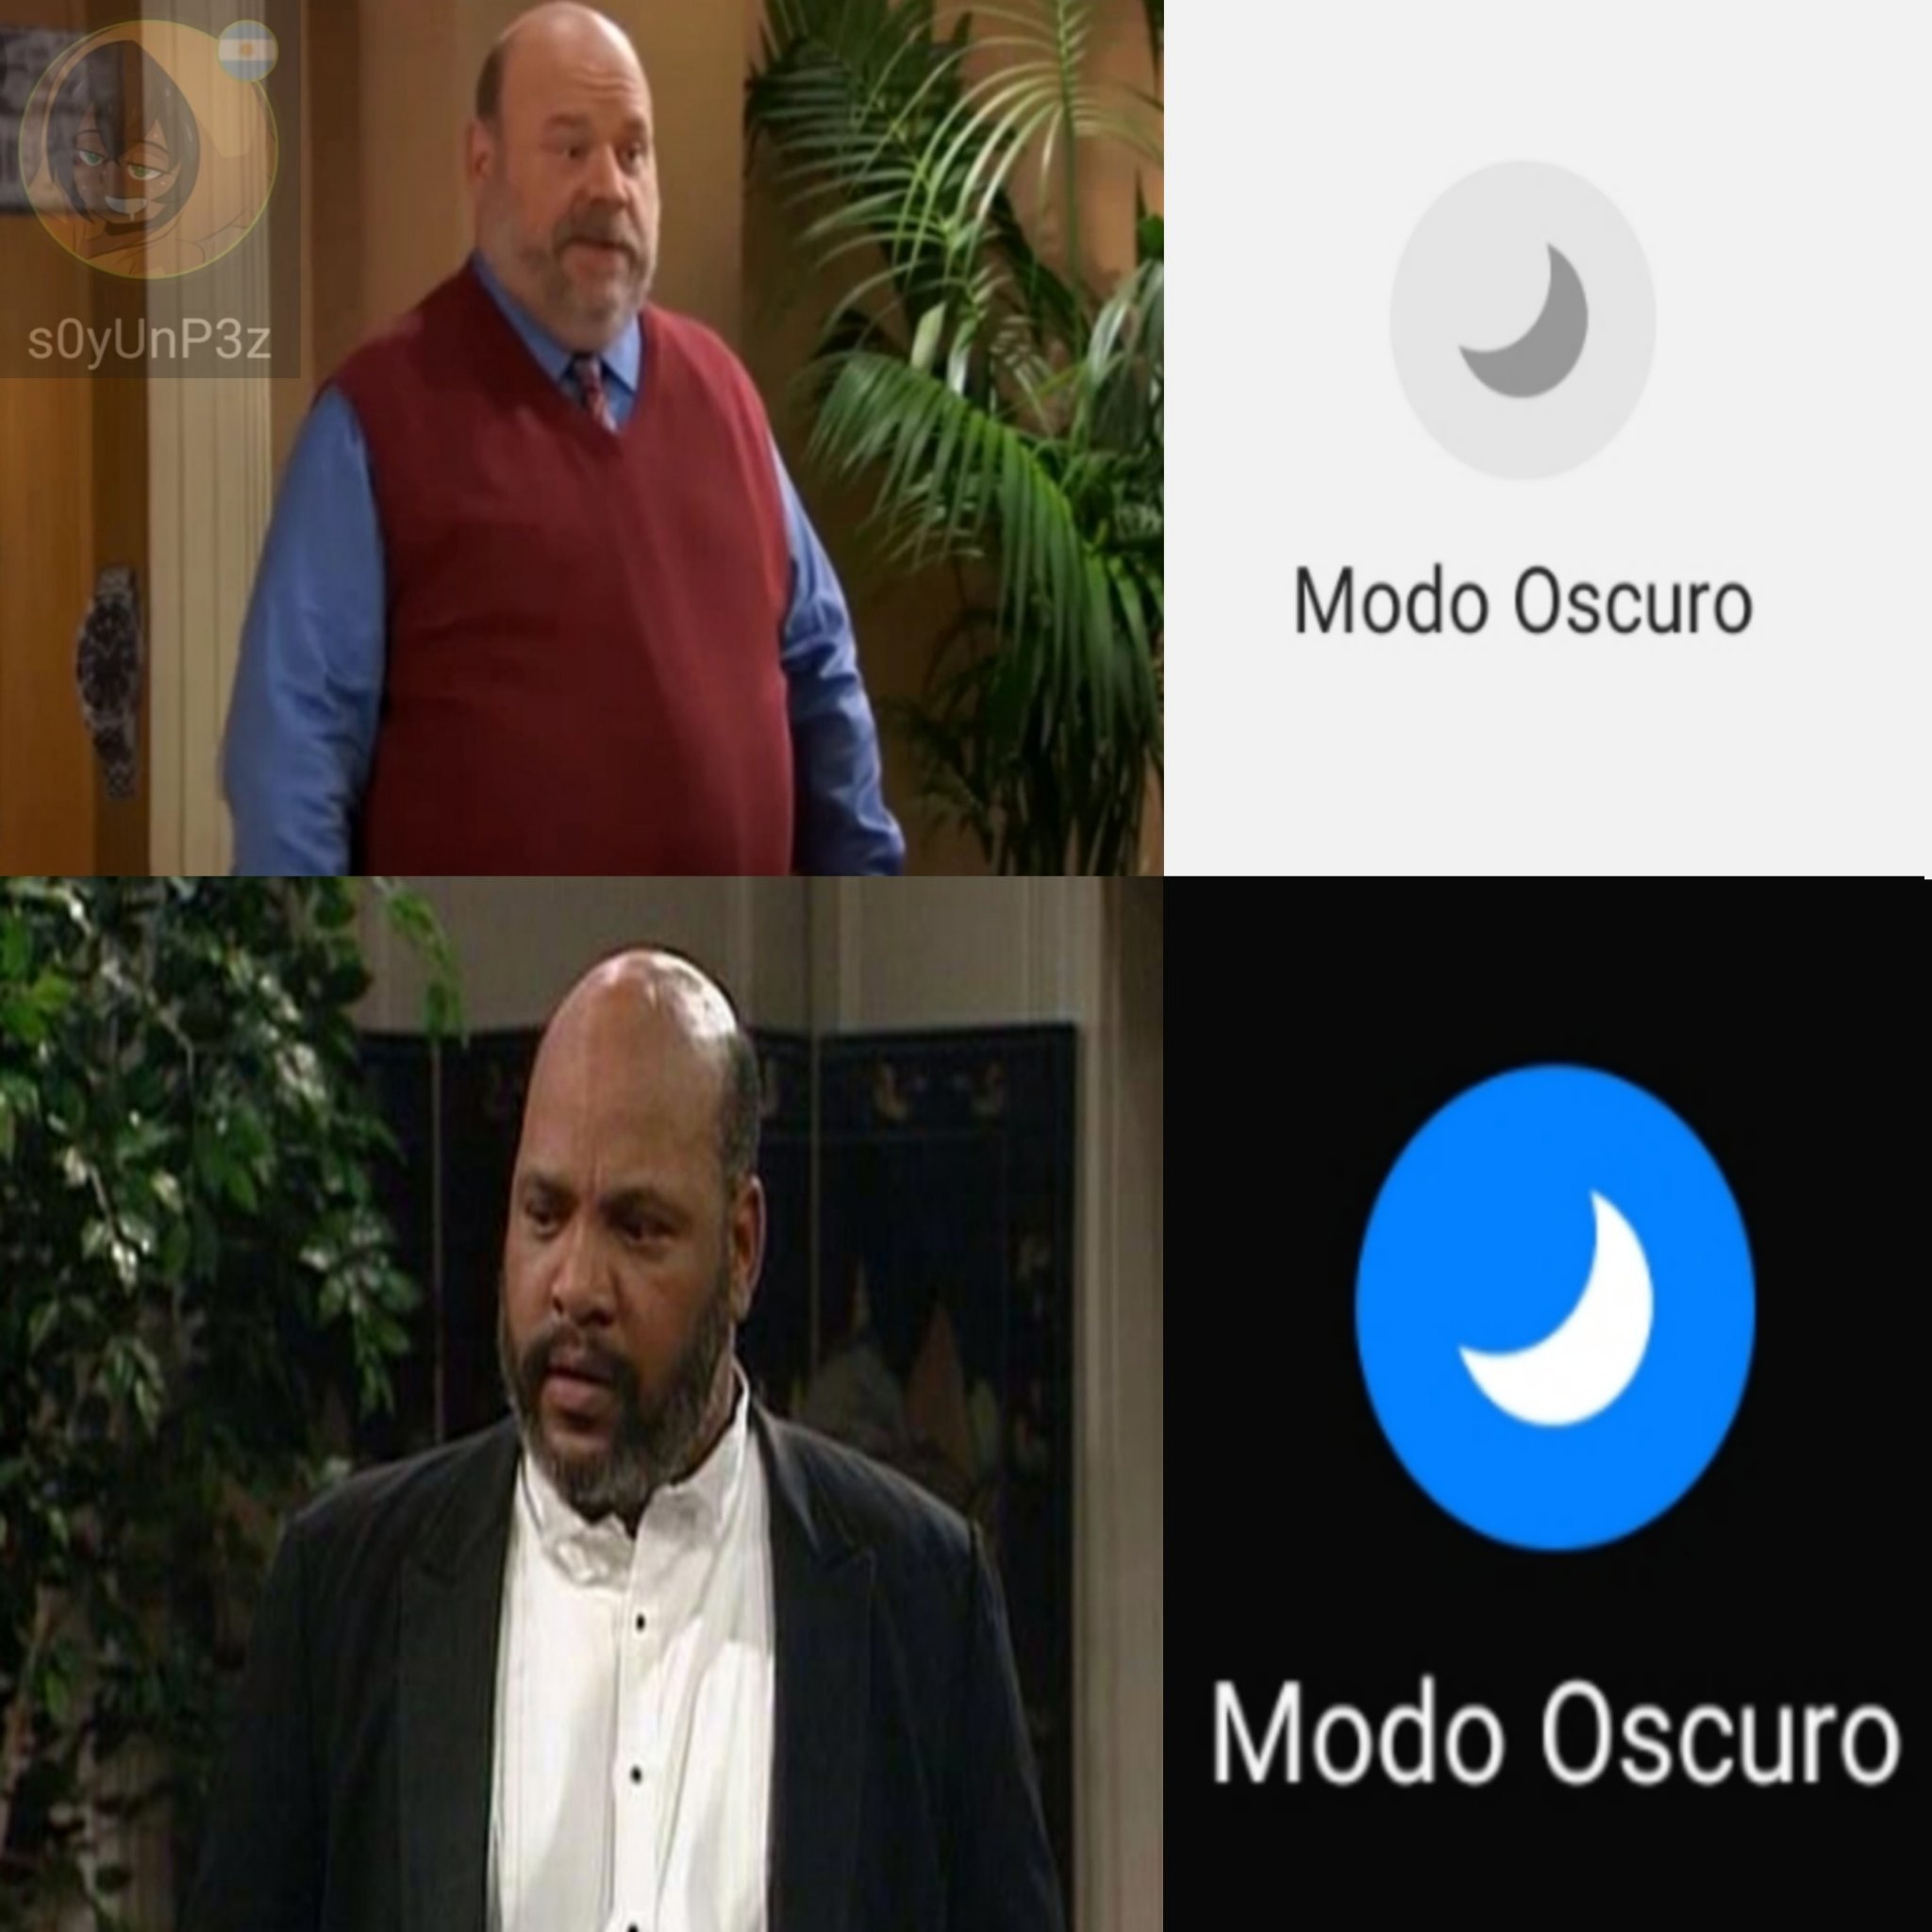 MODO OSCURO ON - meme